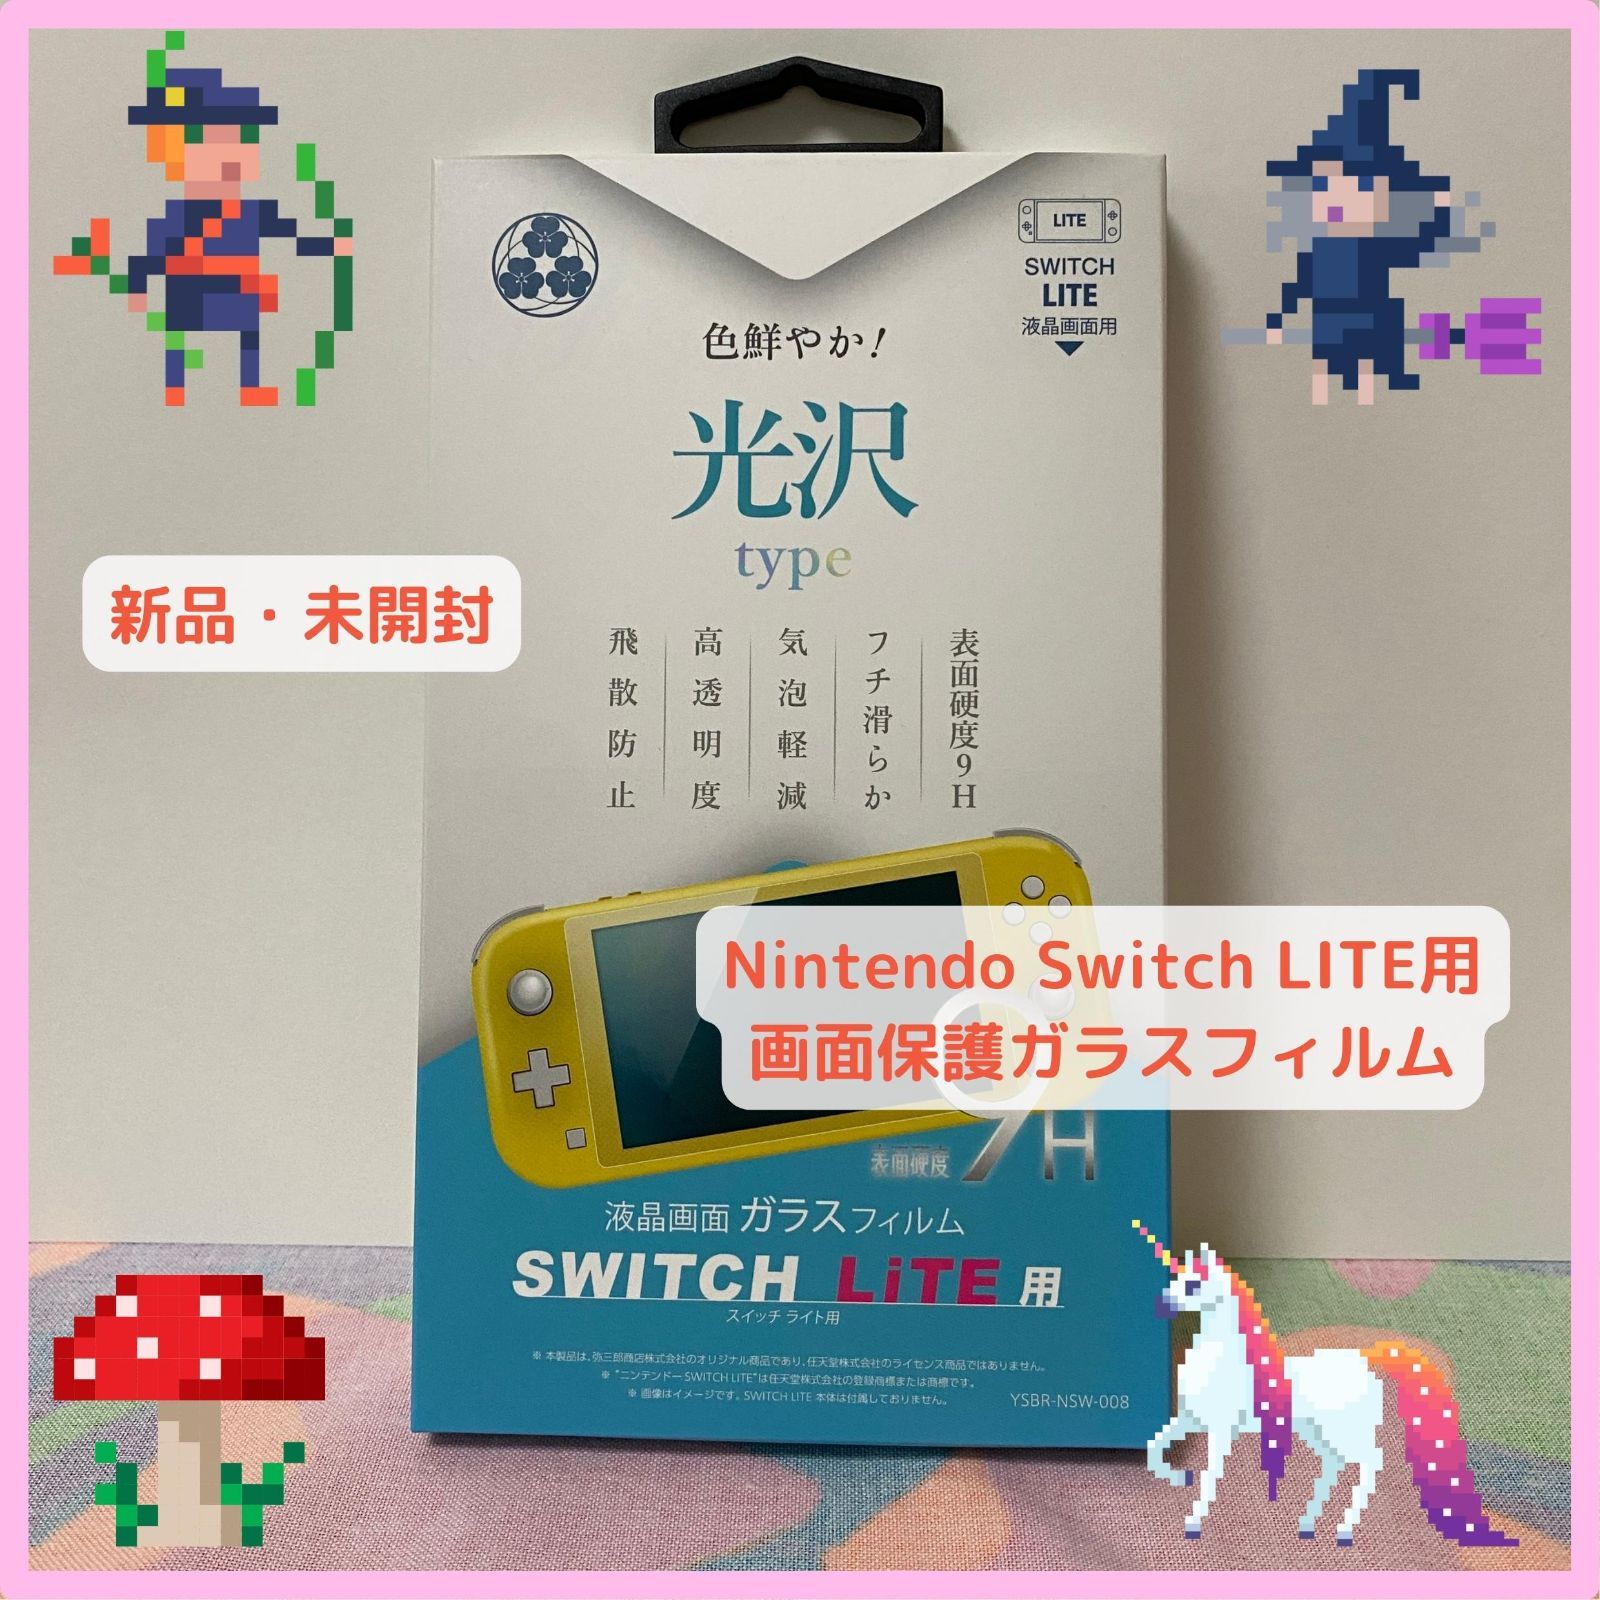 Nintendo Switch Lite未開封です